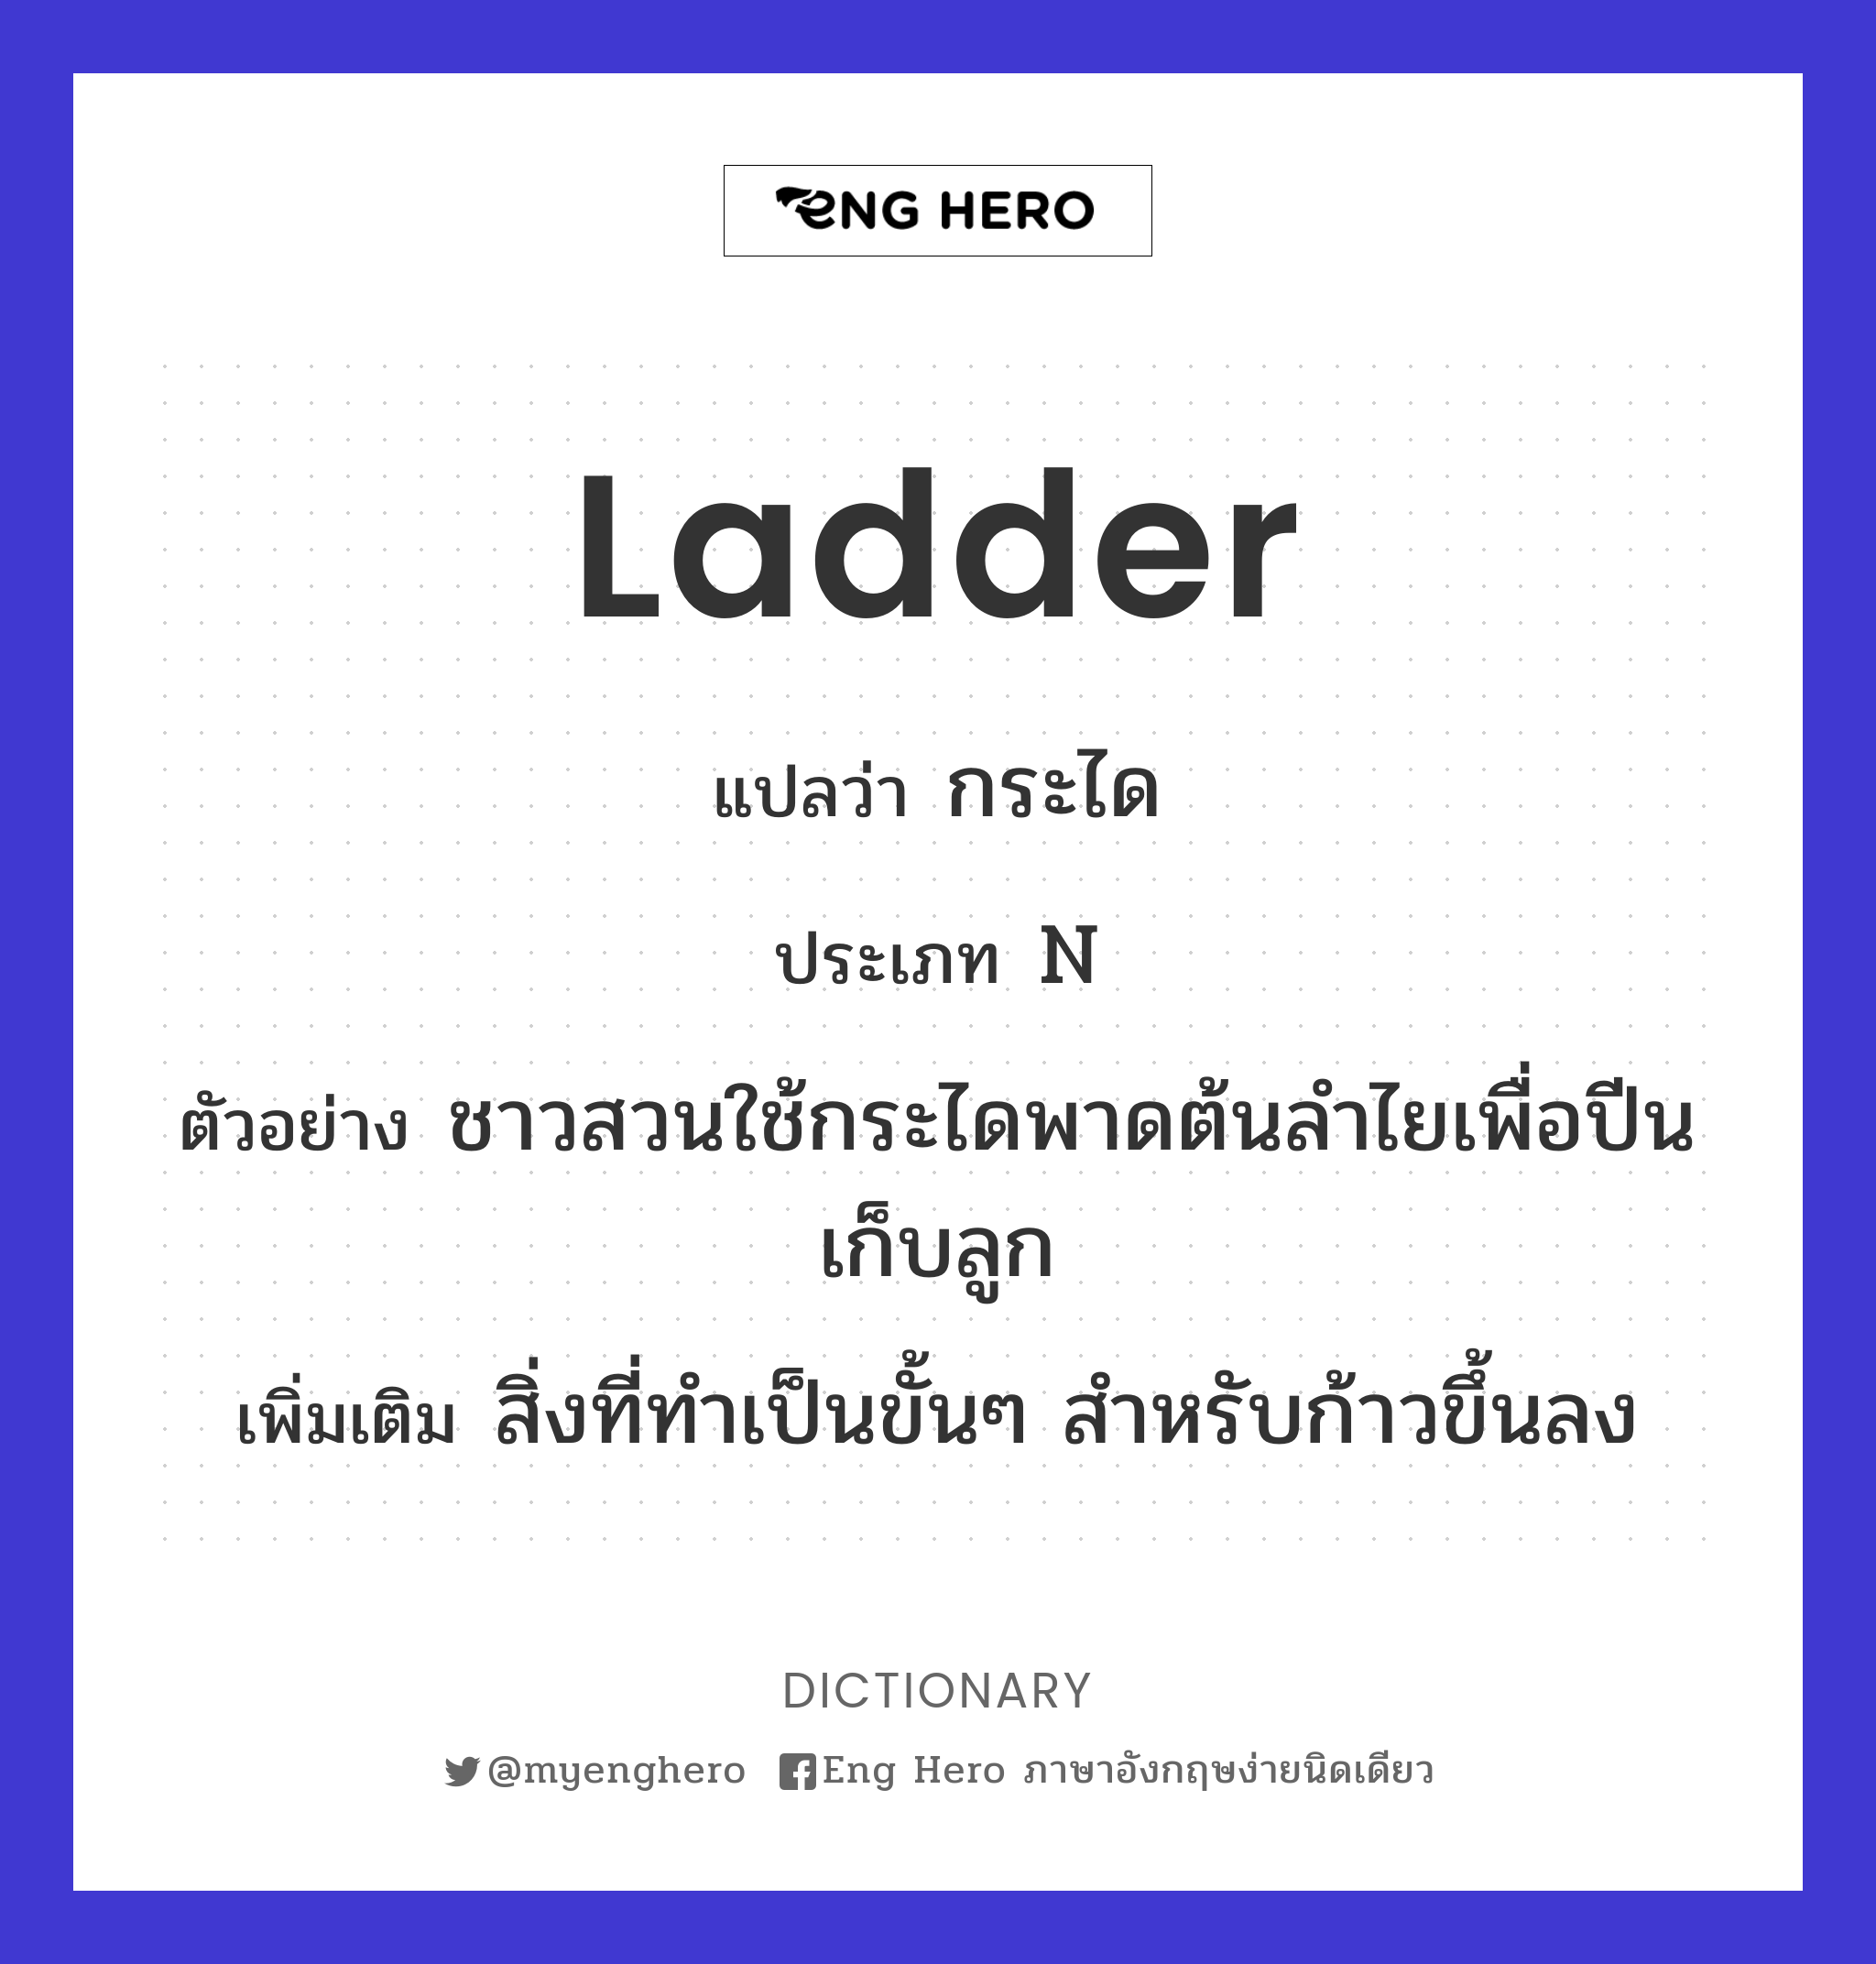 ladder